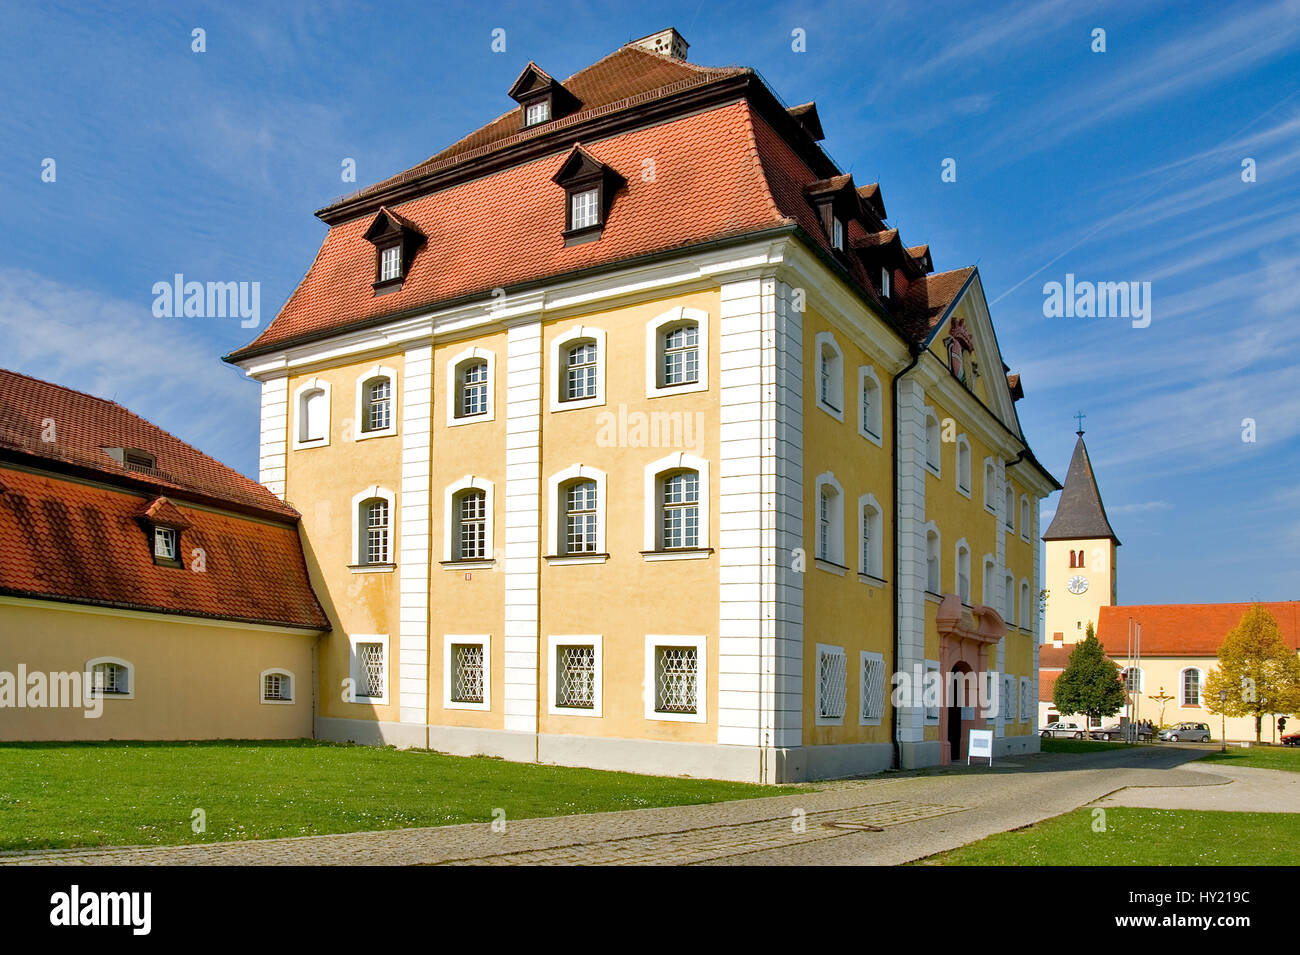 Image du château de Kuemmersbruck Theuren dans le Land allemand de Bavière. Blick auf Schloss Theuren dans KÃ¼mmersbruck in Bayern, Deutschland. Banque D'Images